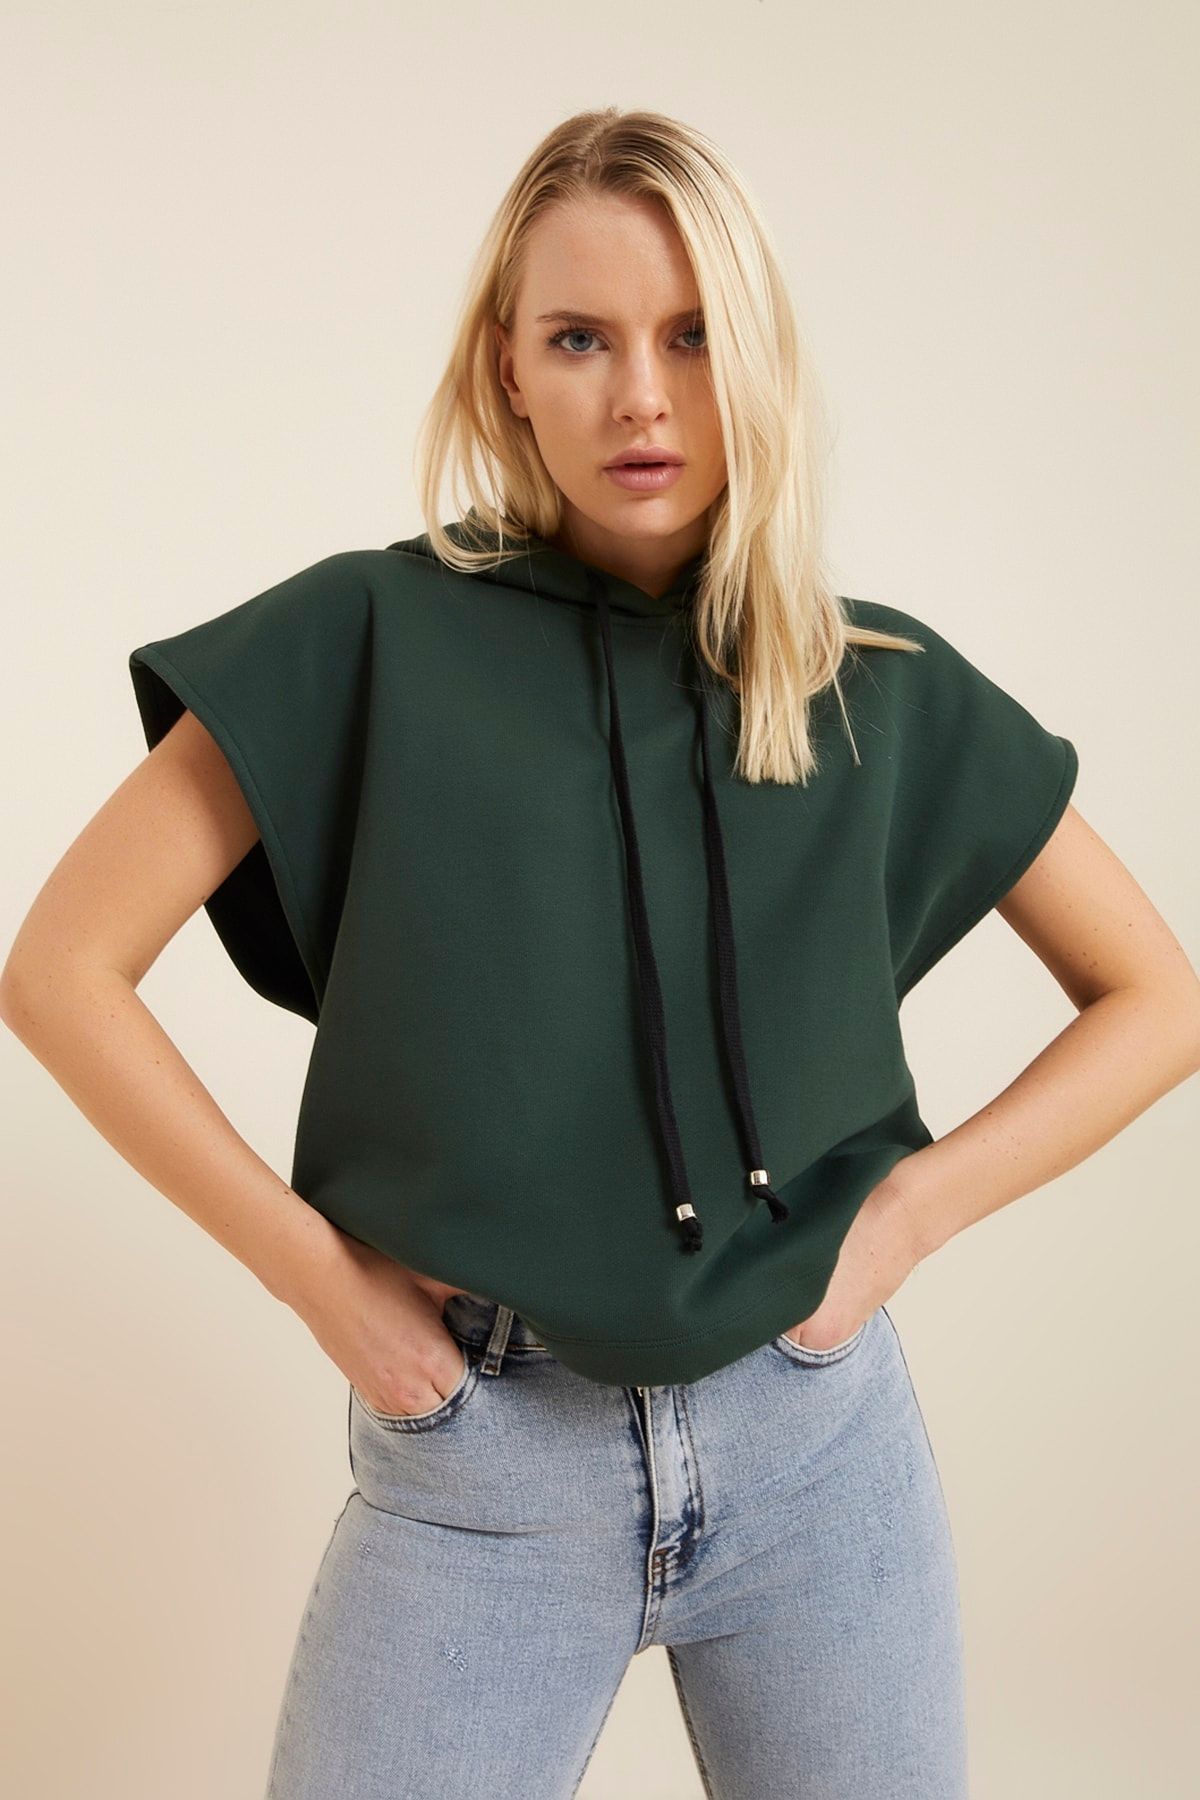 Hanna's Kadın Koyu Yeşil Kapüşonlu Kolsuz Sweatshirt